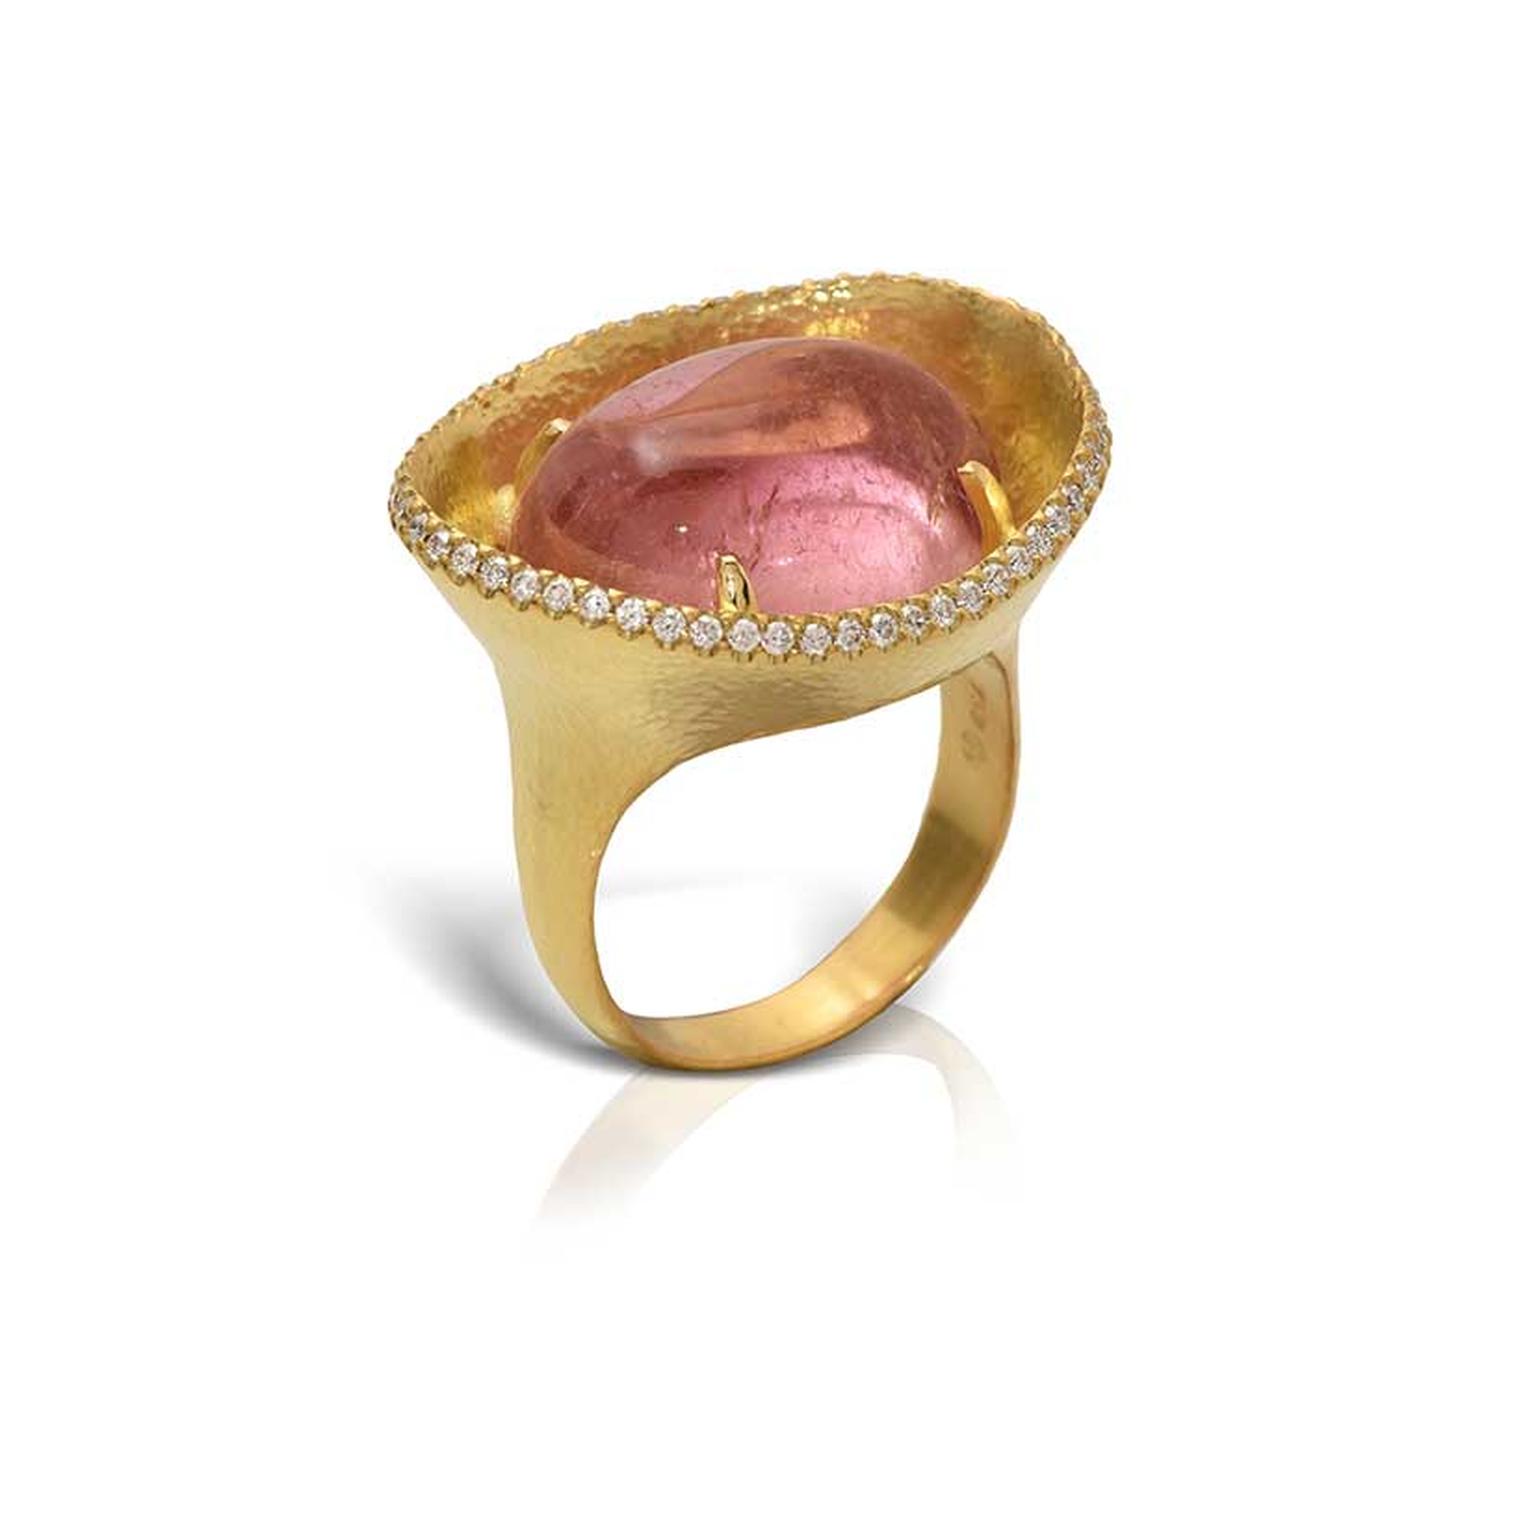 Lalaounis Petal ring with pink tourmaline